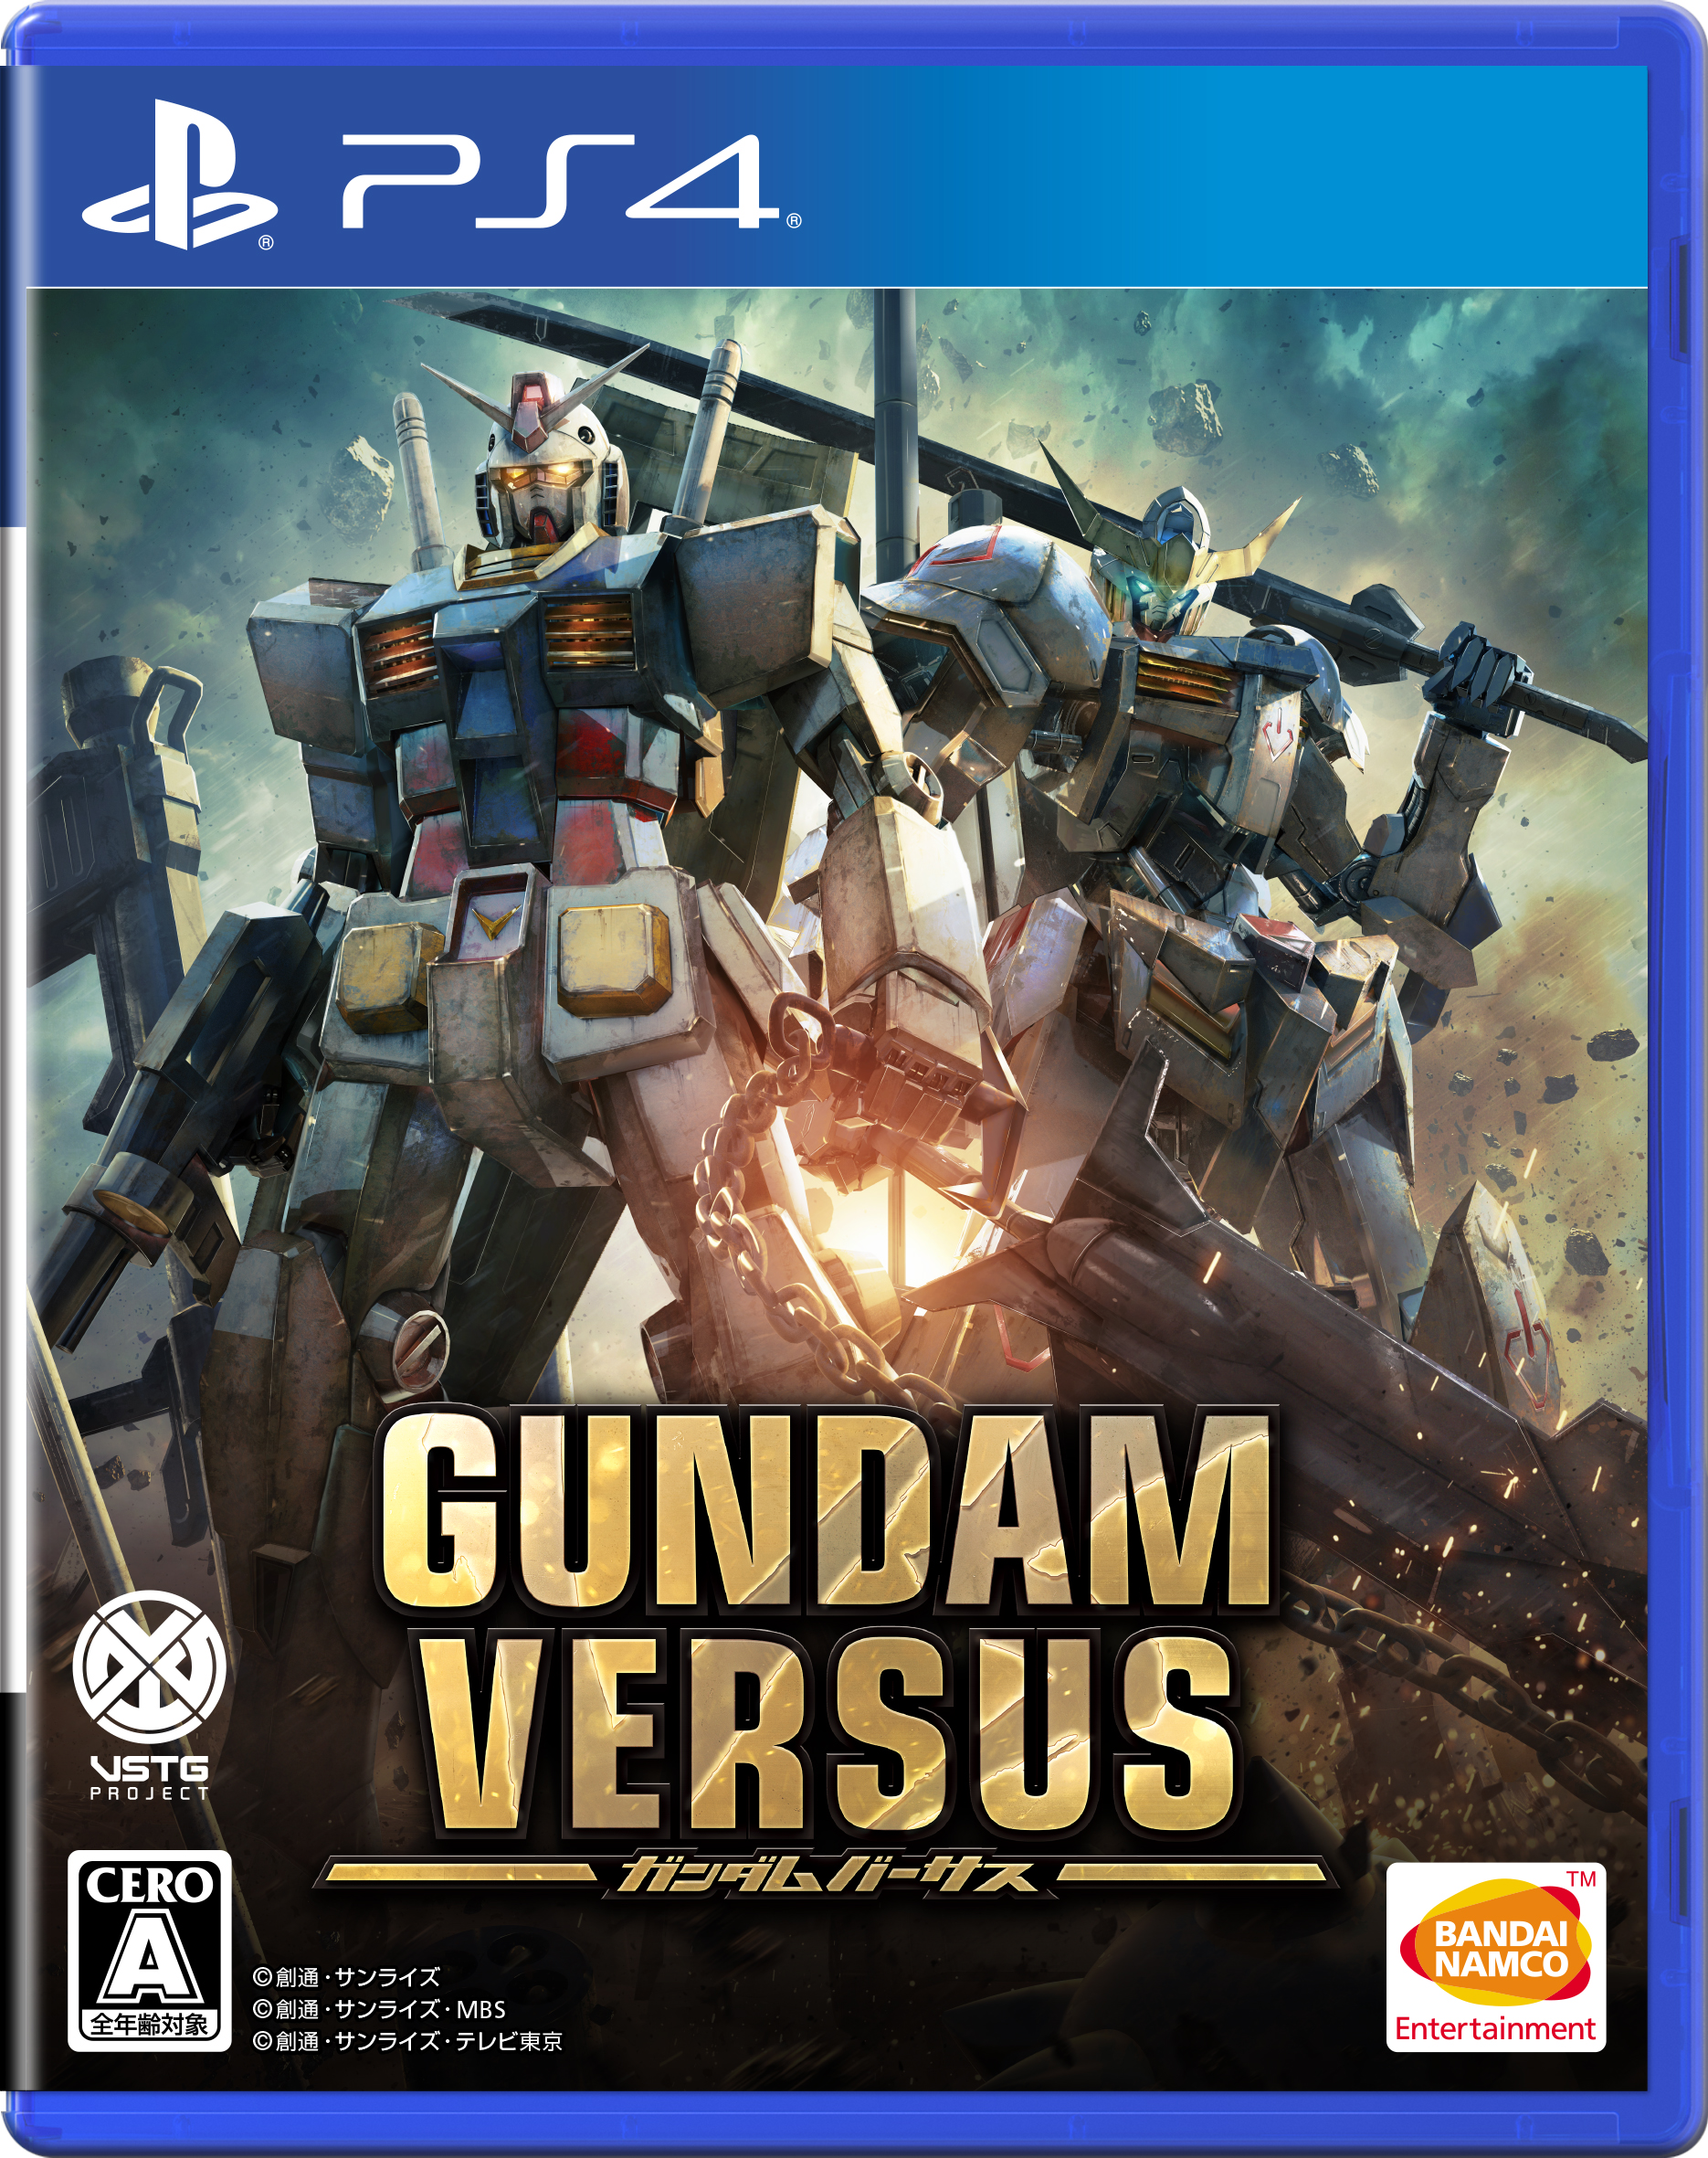 Gundam Versus 追加ms アルヴァアロン と バスターガンダム 配信開始 Game Watch